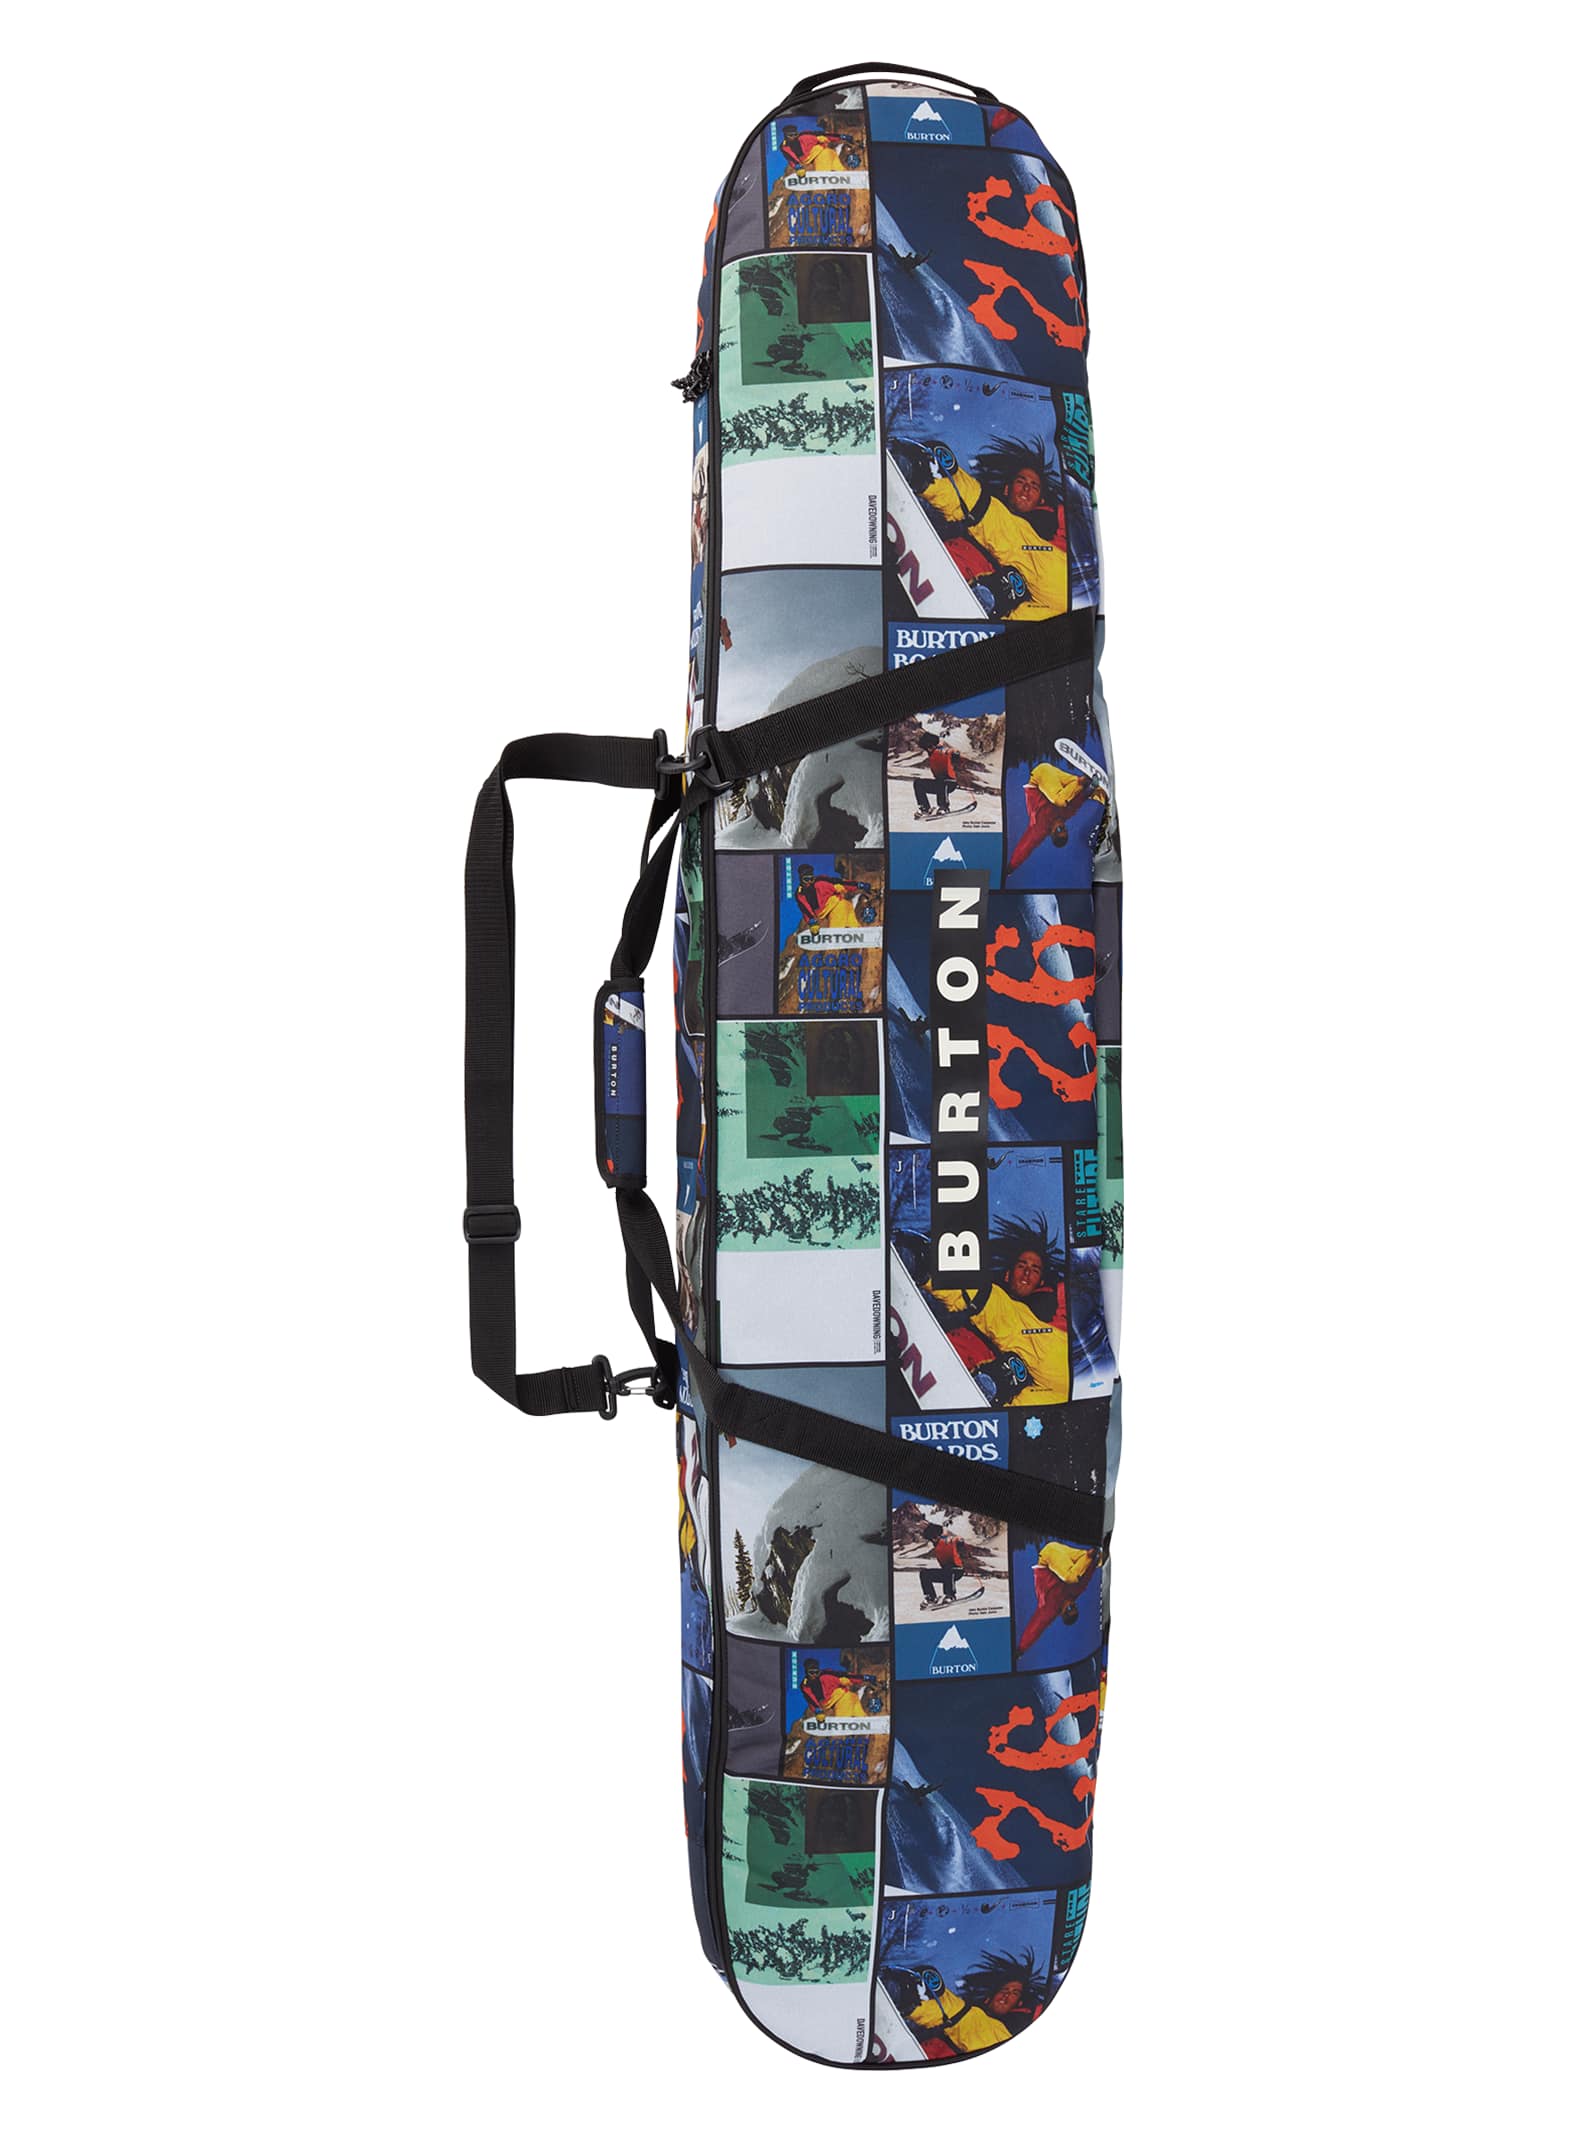 Snowboarding Gear Bags | Burton Snowboards US